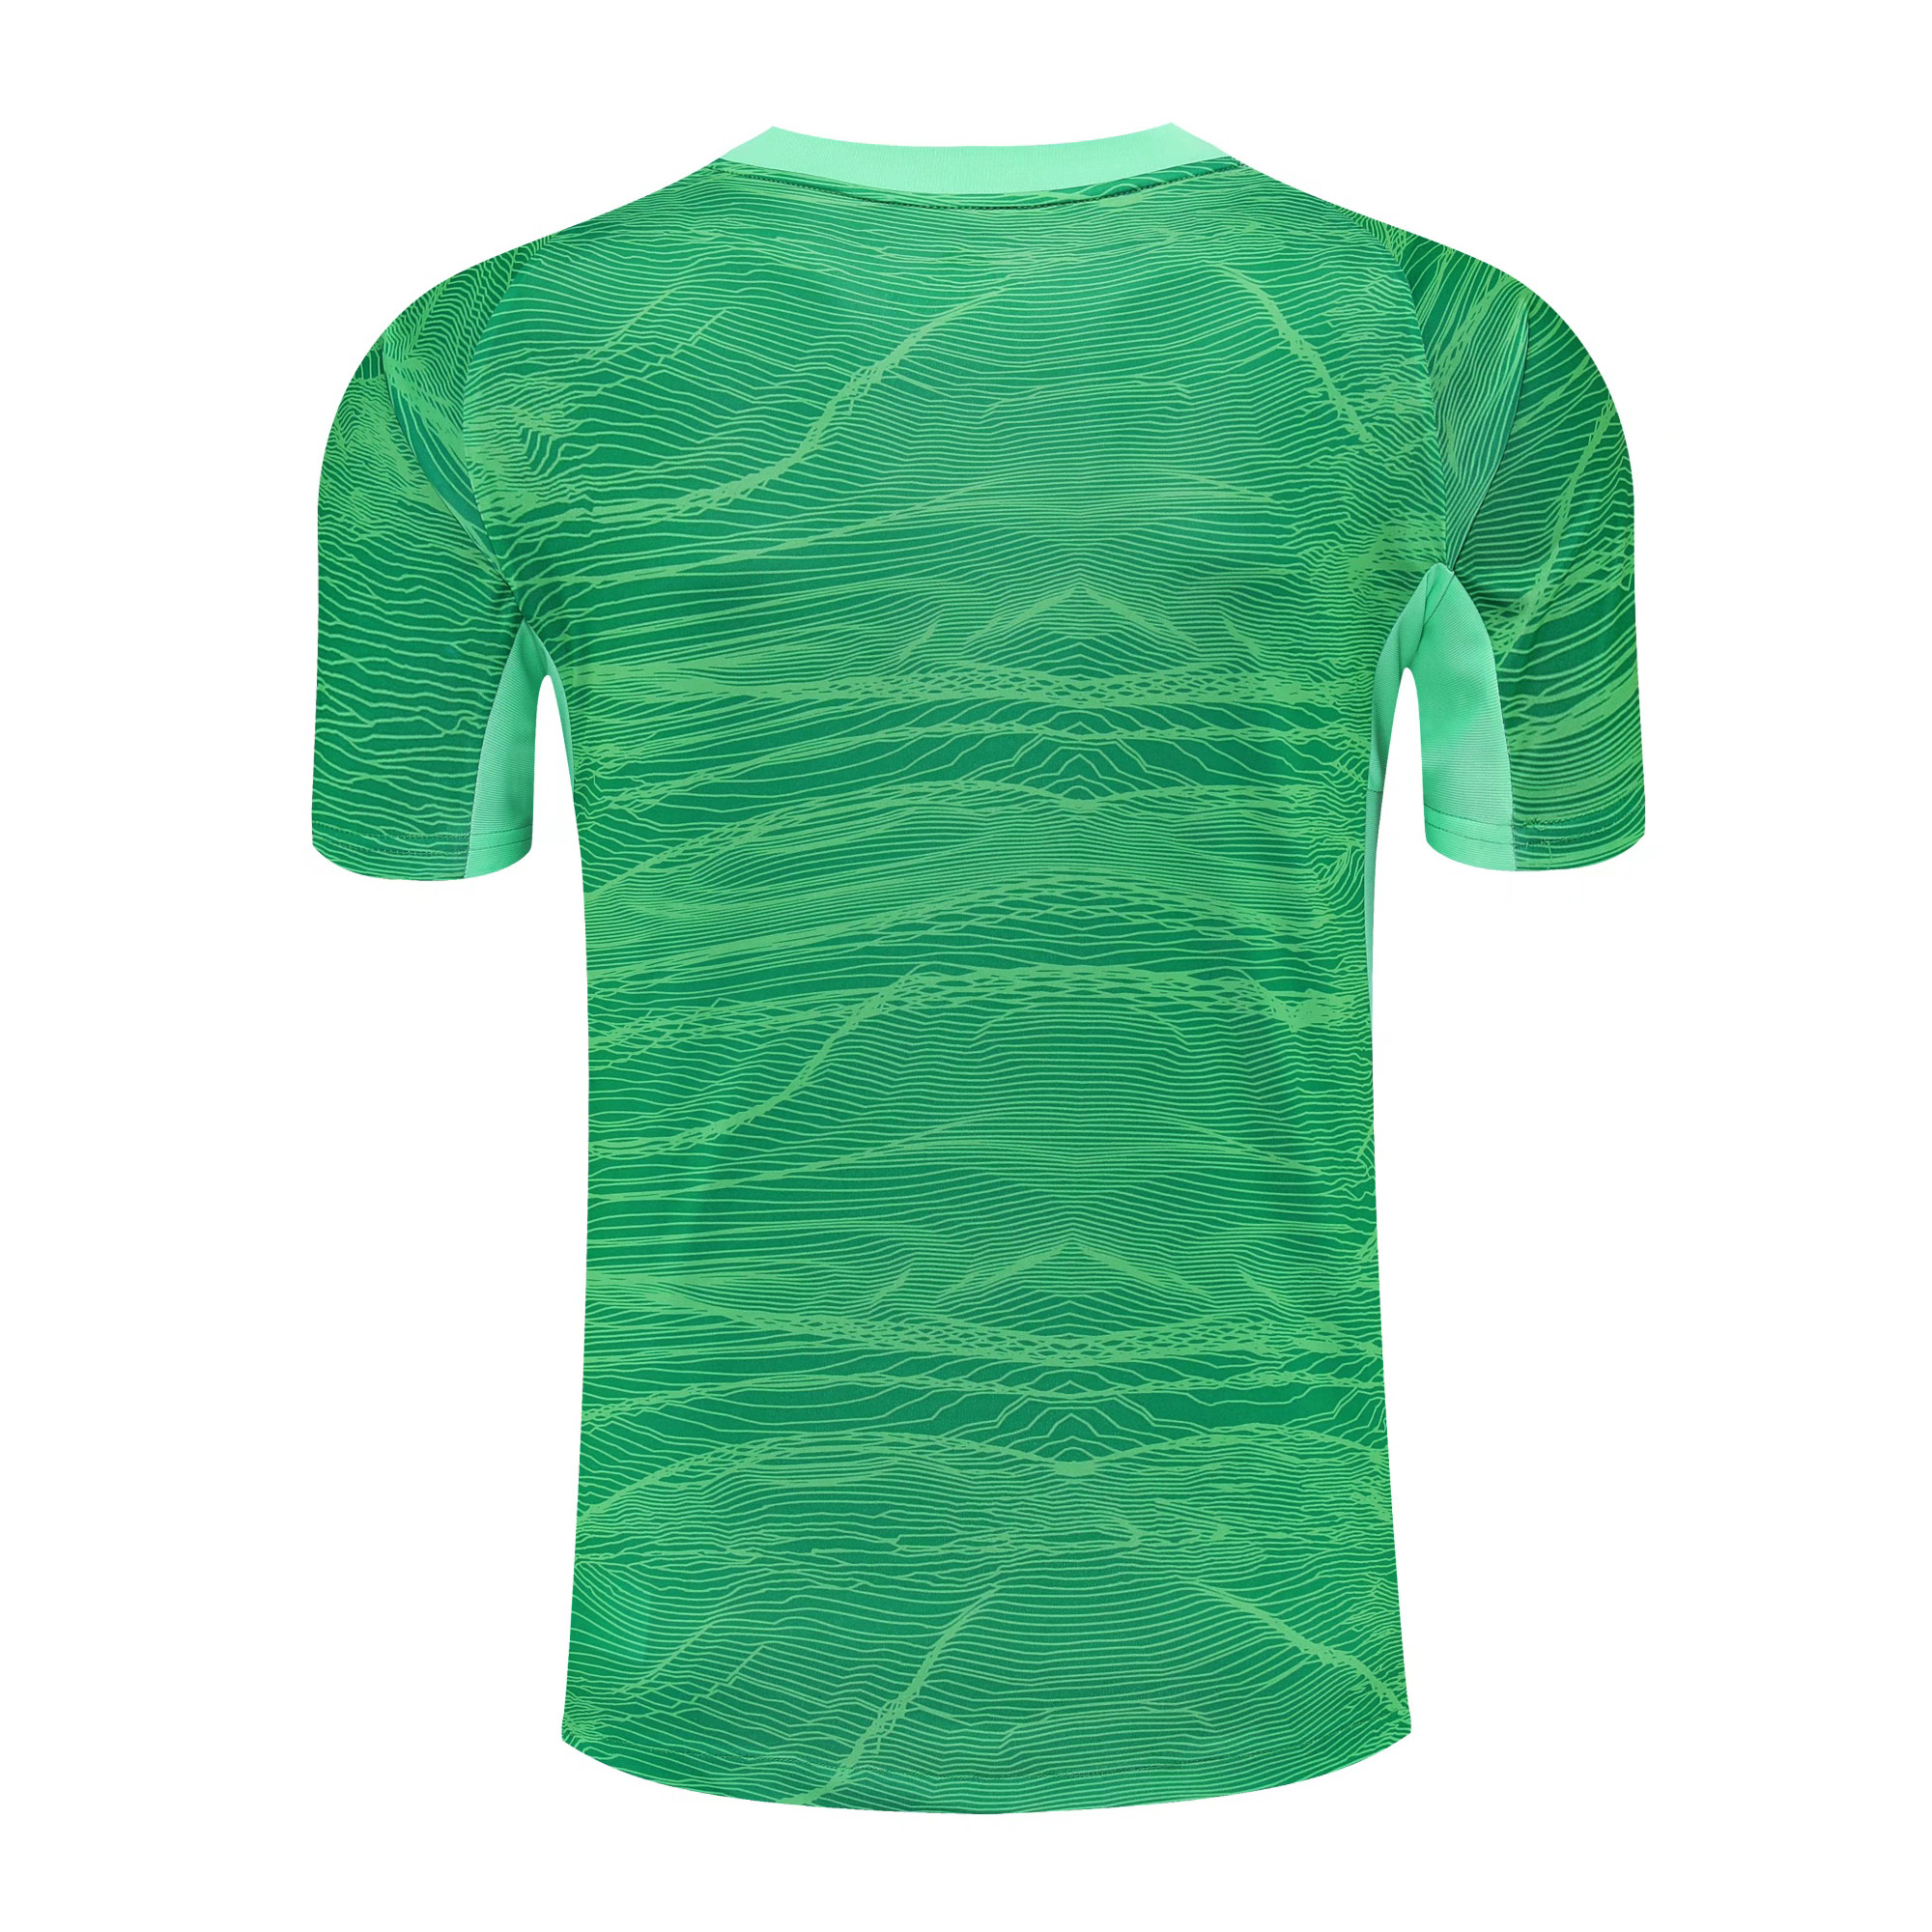 Camiseta de Fútbol Portero Personalizada Juventus 2021/22